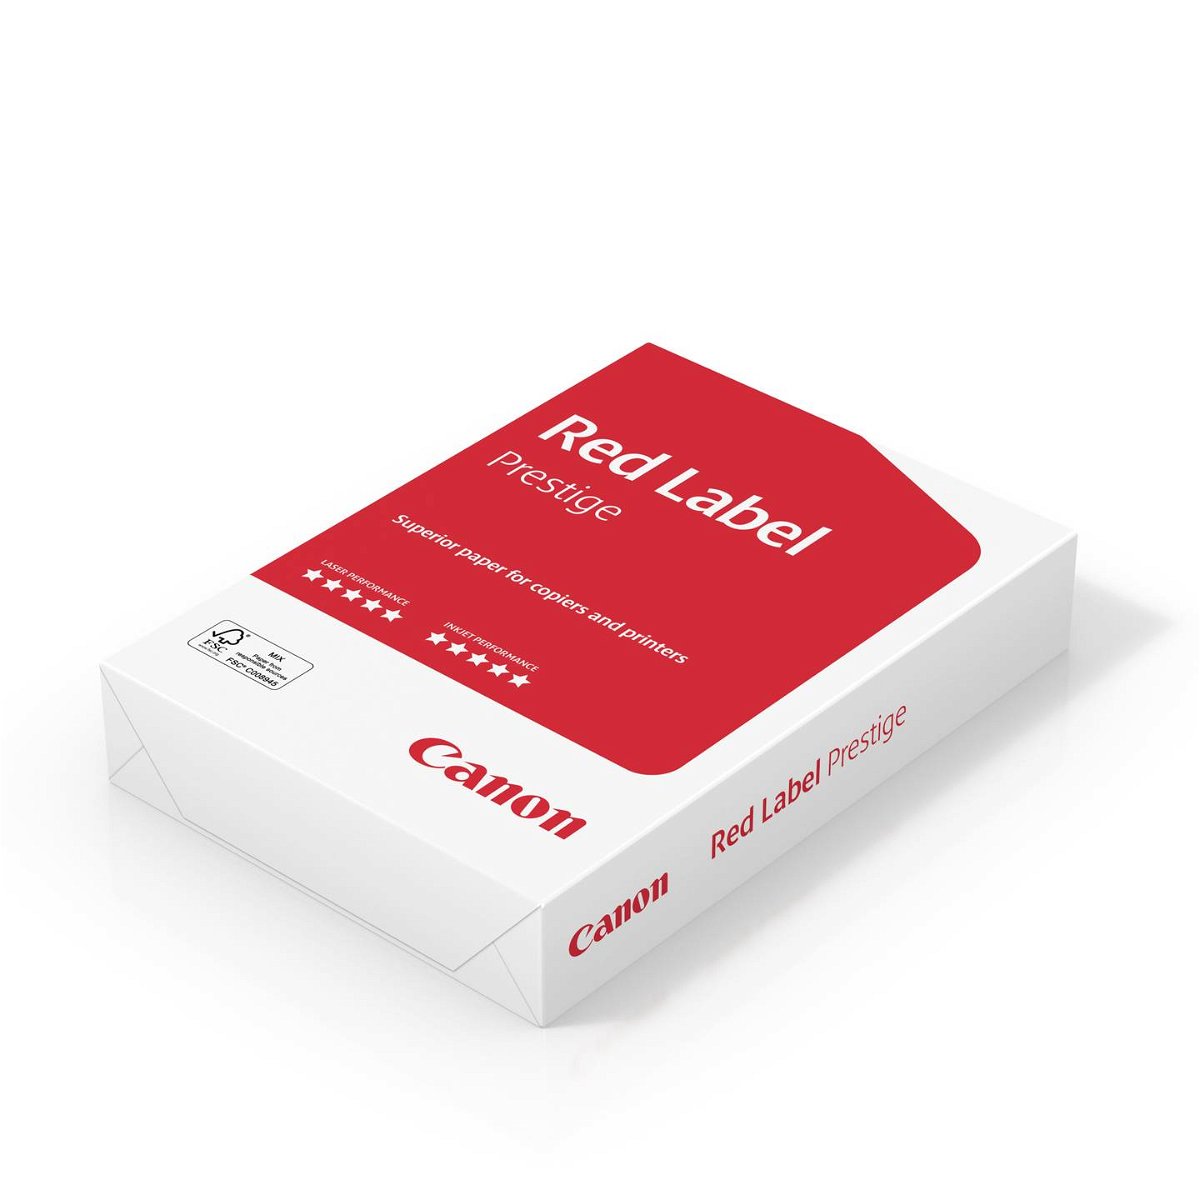 Canon Red Label Prestige Universal Druckerpapier Kopierpapier DIN A4 80 g/m² 500 Blatt Weiss